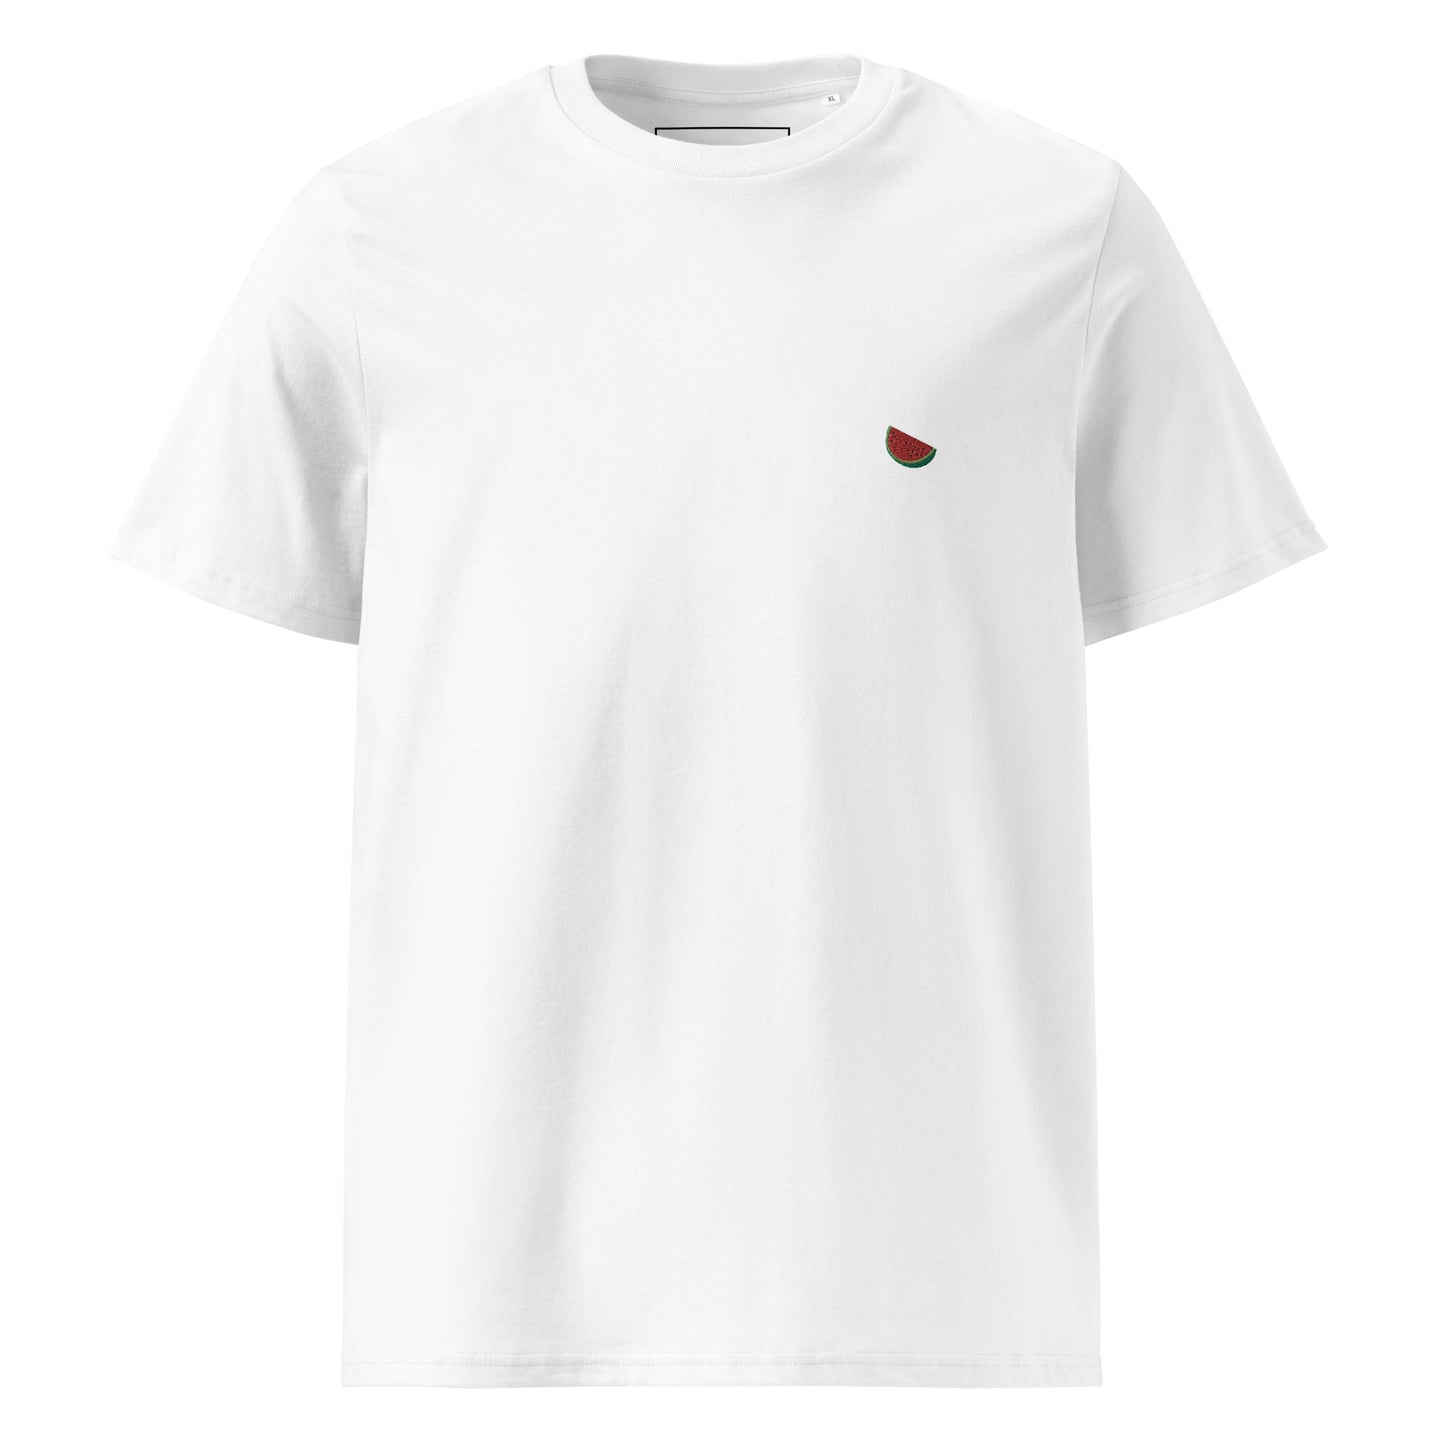 Watermelon - Embroidered Unisex Organic Cotton T-shirt